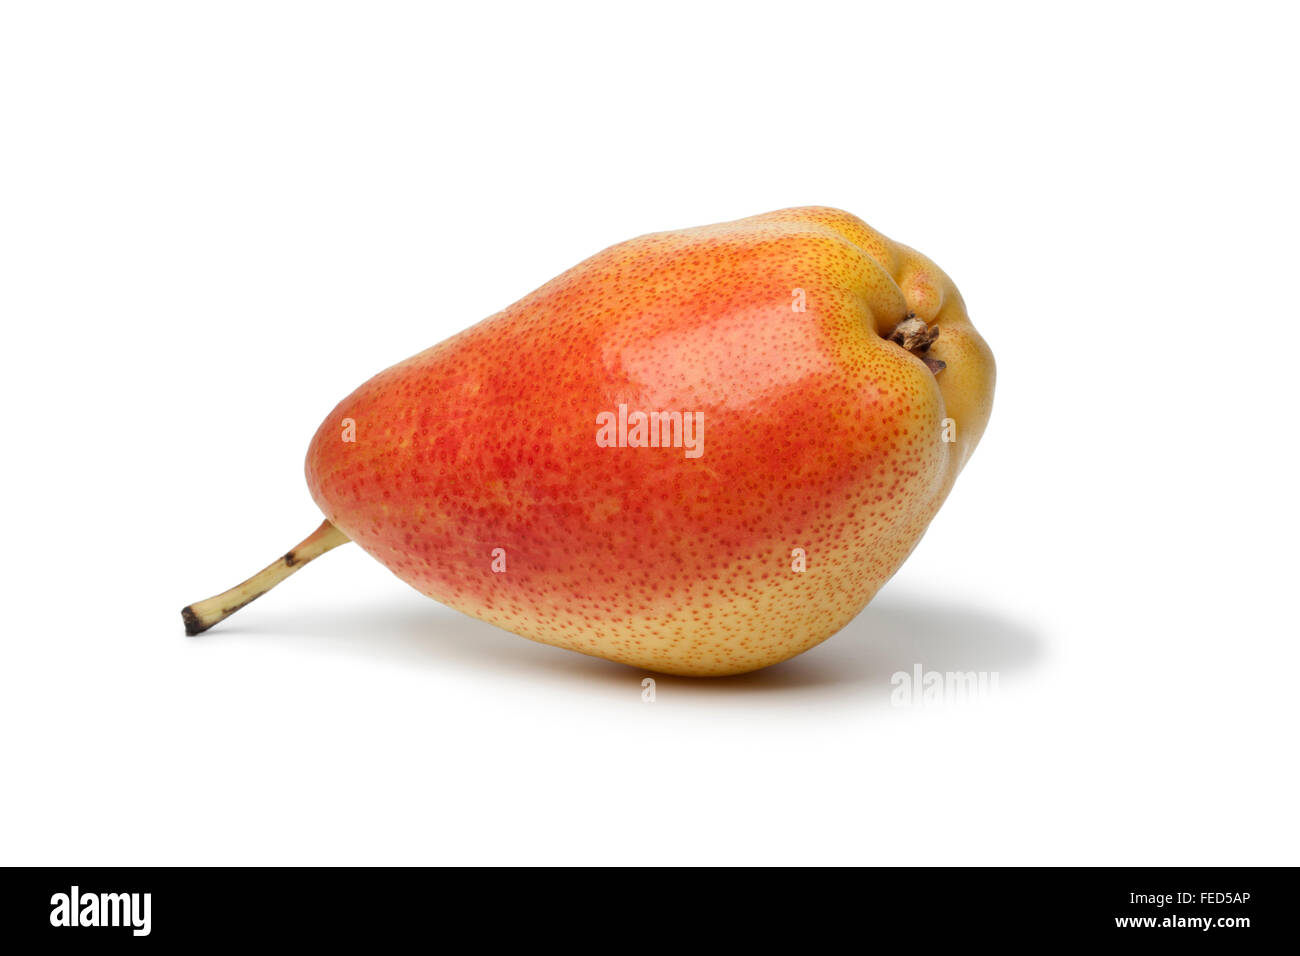 Single ripe juicy pear on white background Stock Photo